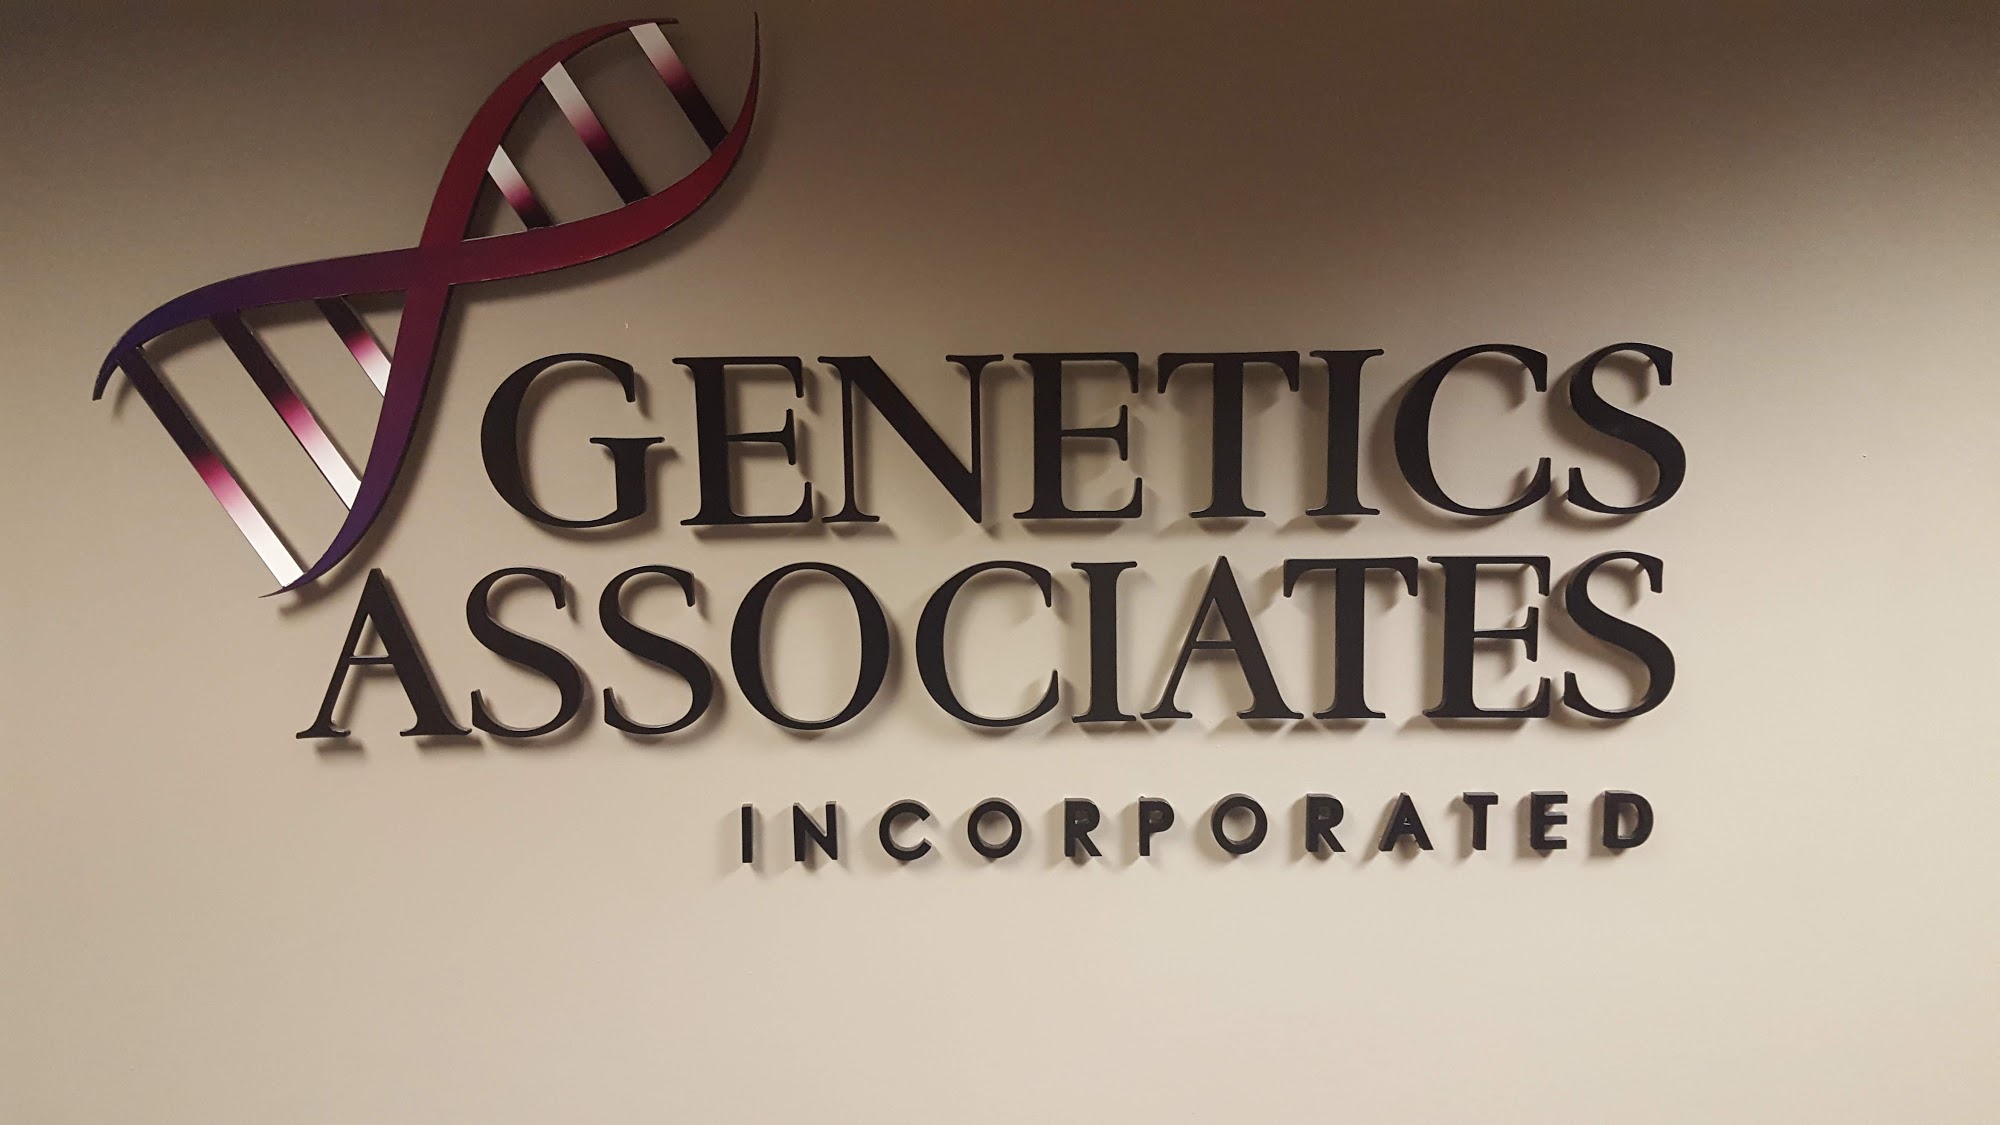 Genetics Associates